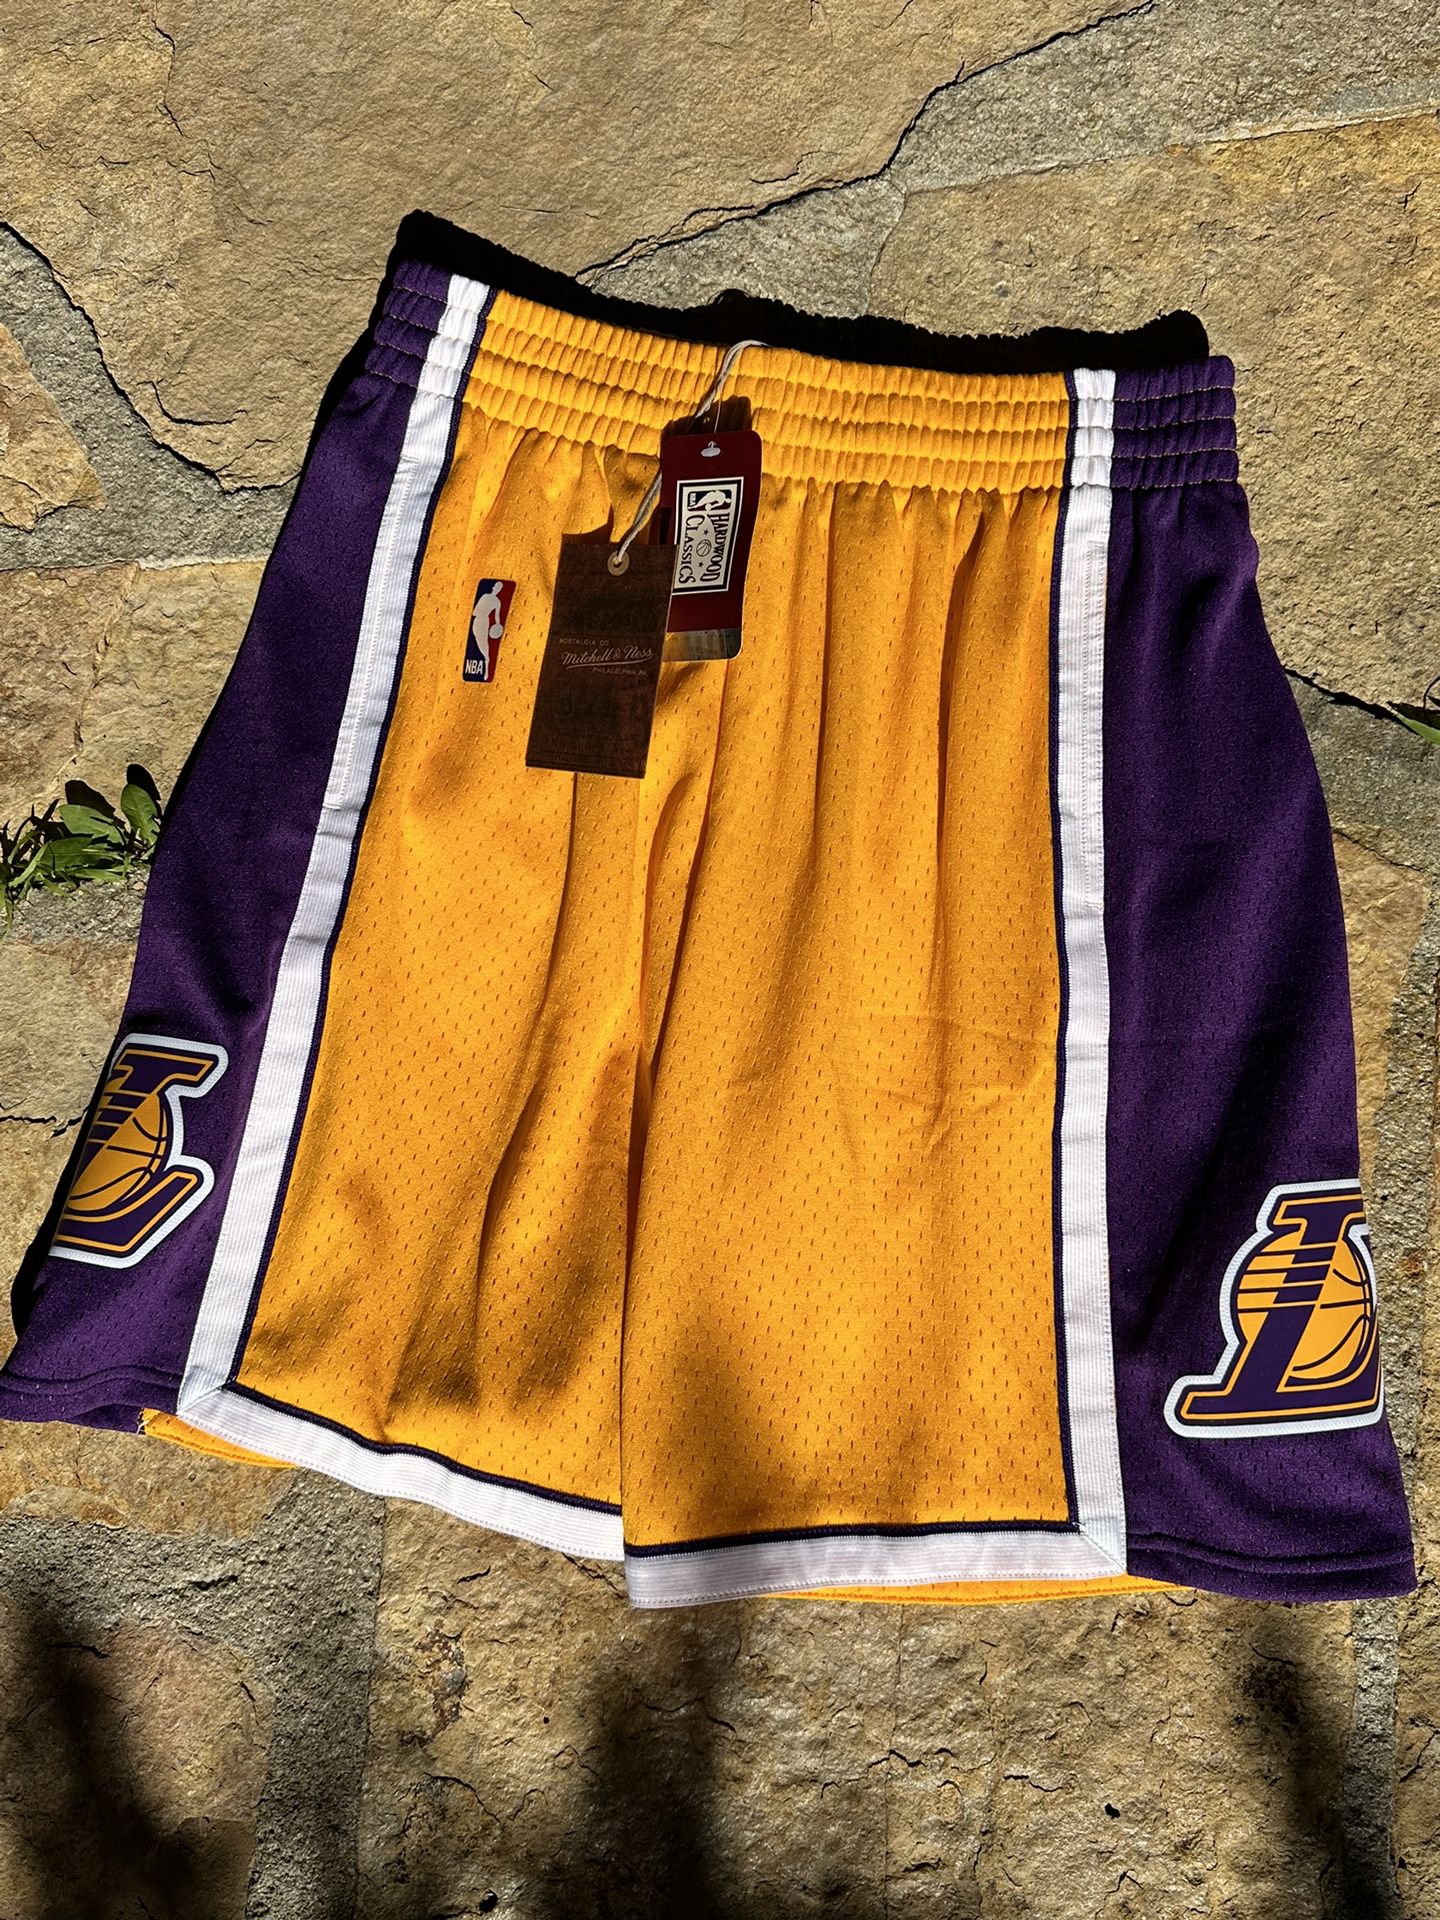 Los Angeles Lakers Mitchell & Ness NBA Home Authentic Shorts Medium/XL NWT Kobe